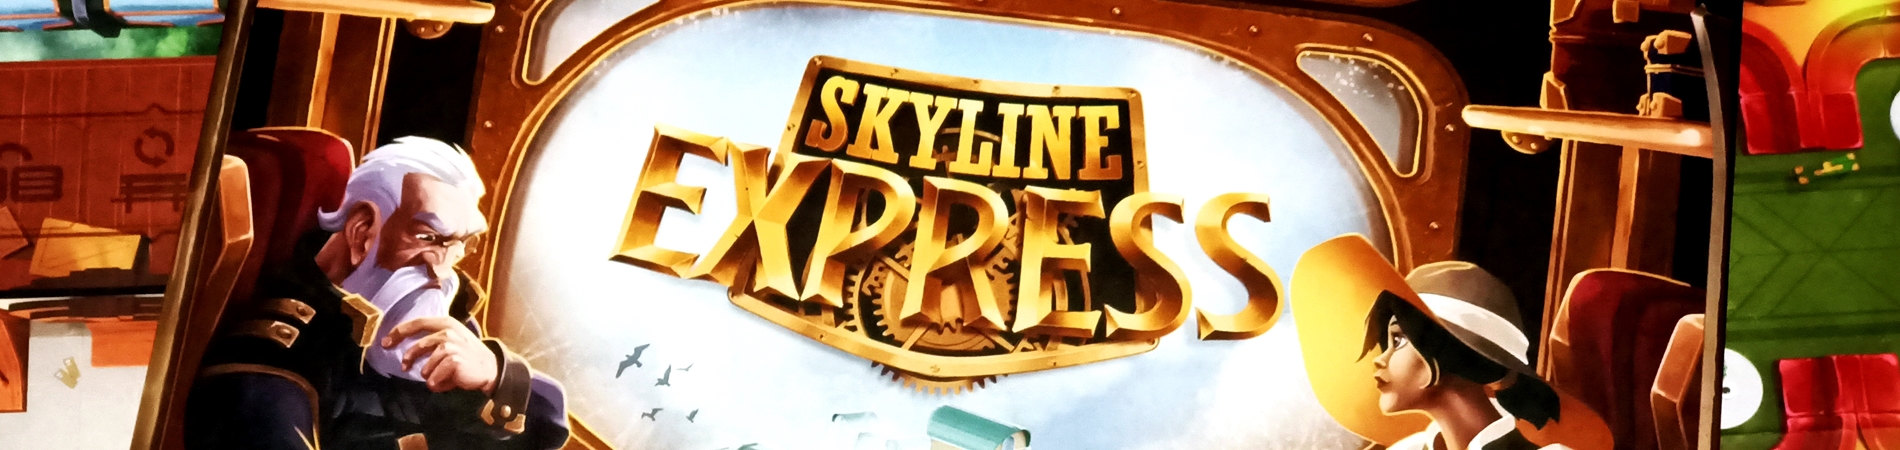 Skyline Express